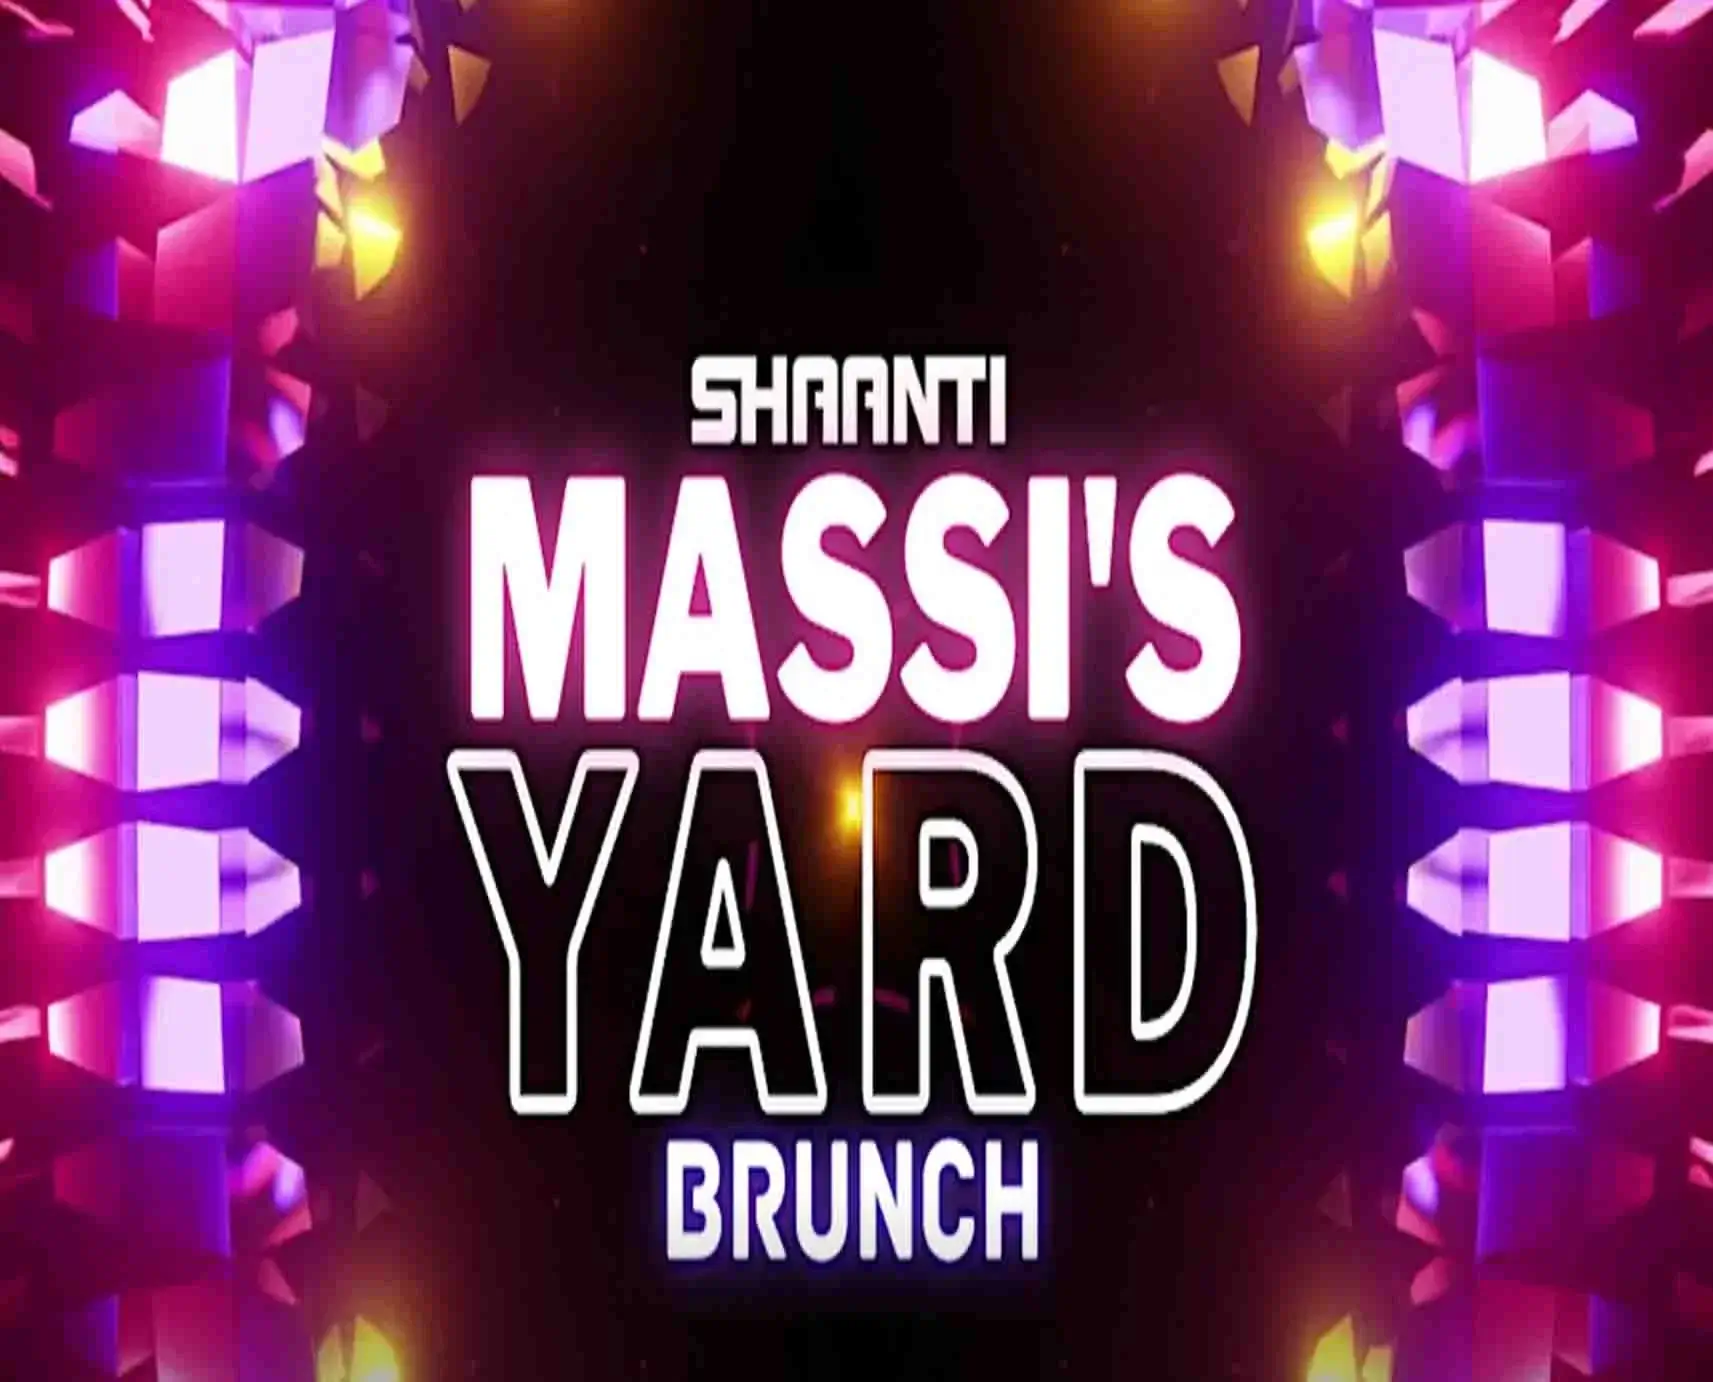 MASSI'S YARD BRUNCH